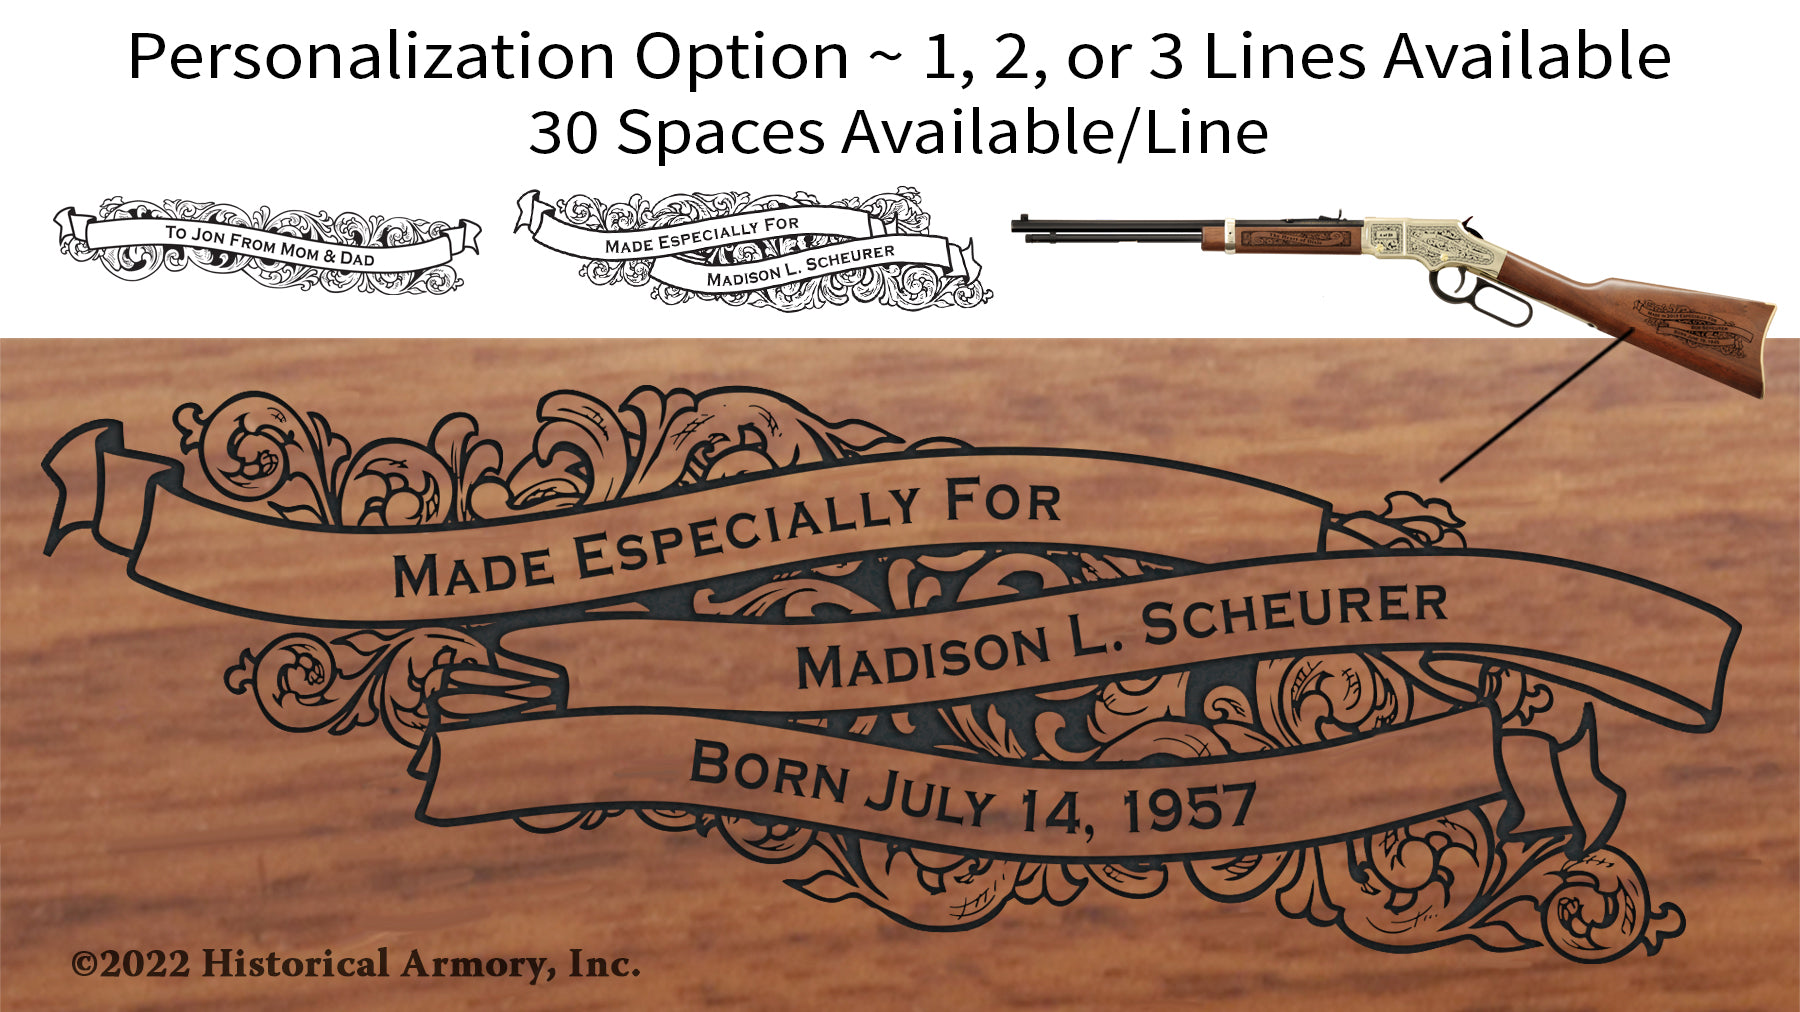 Mariposa County California Engraved Rifle Personalization